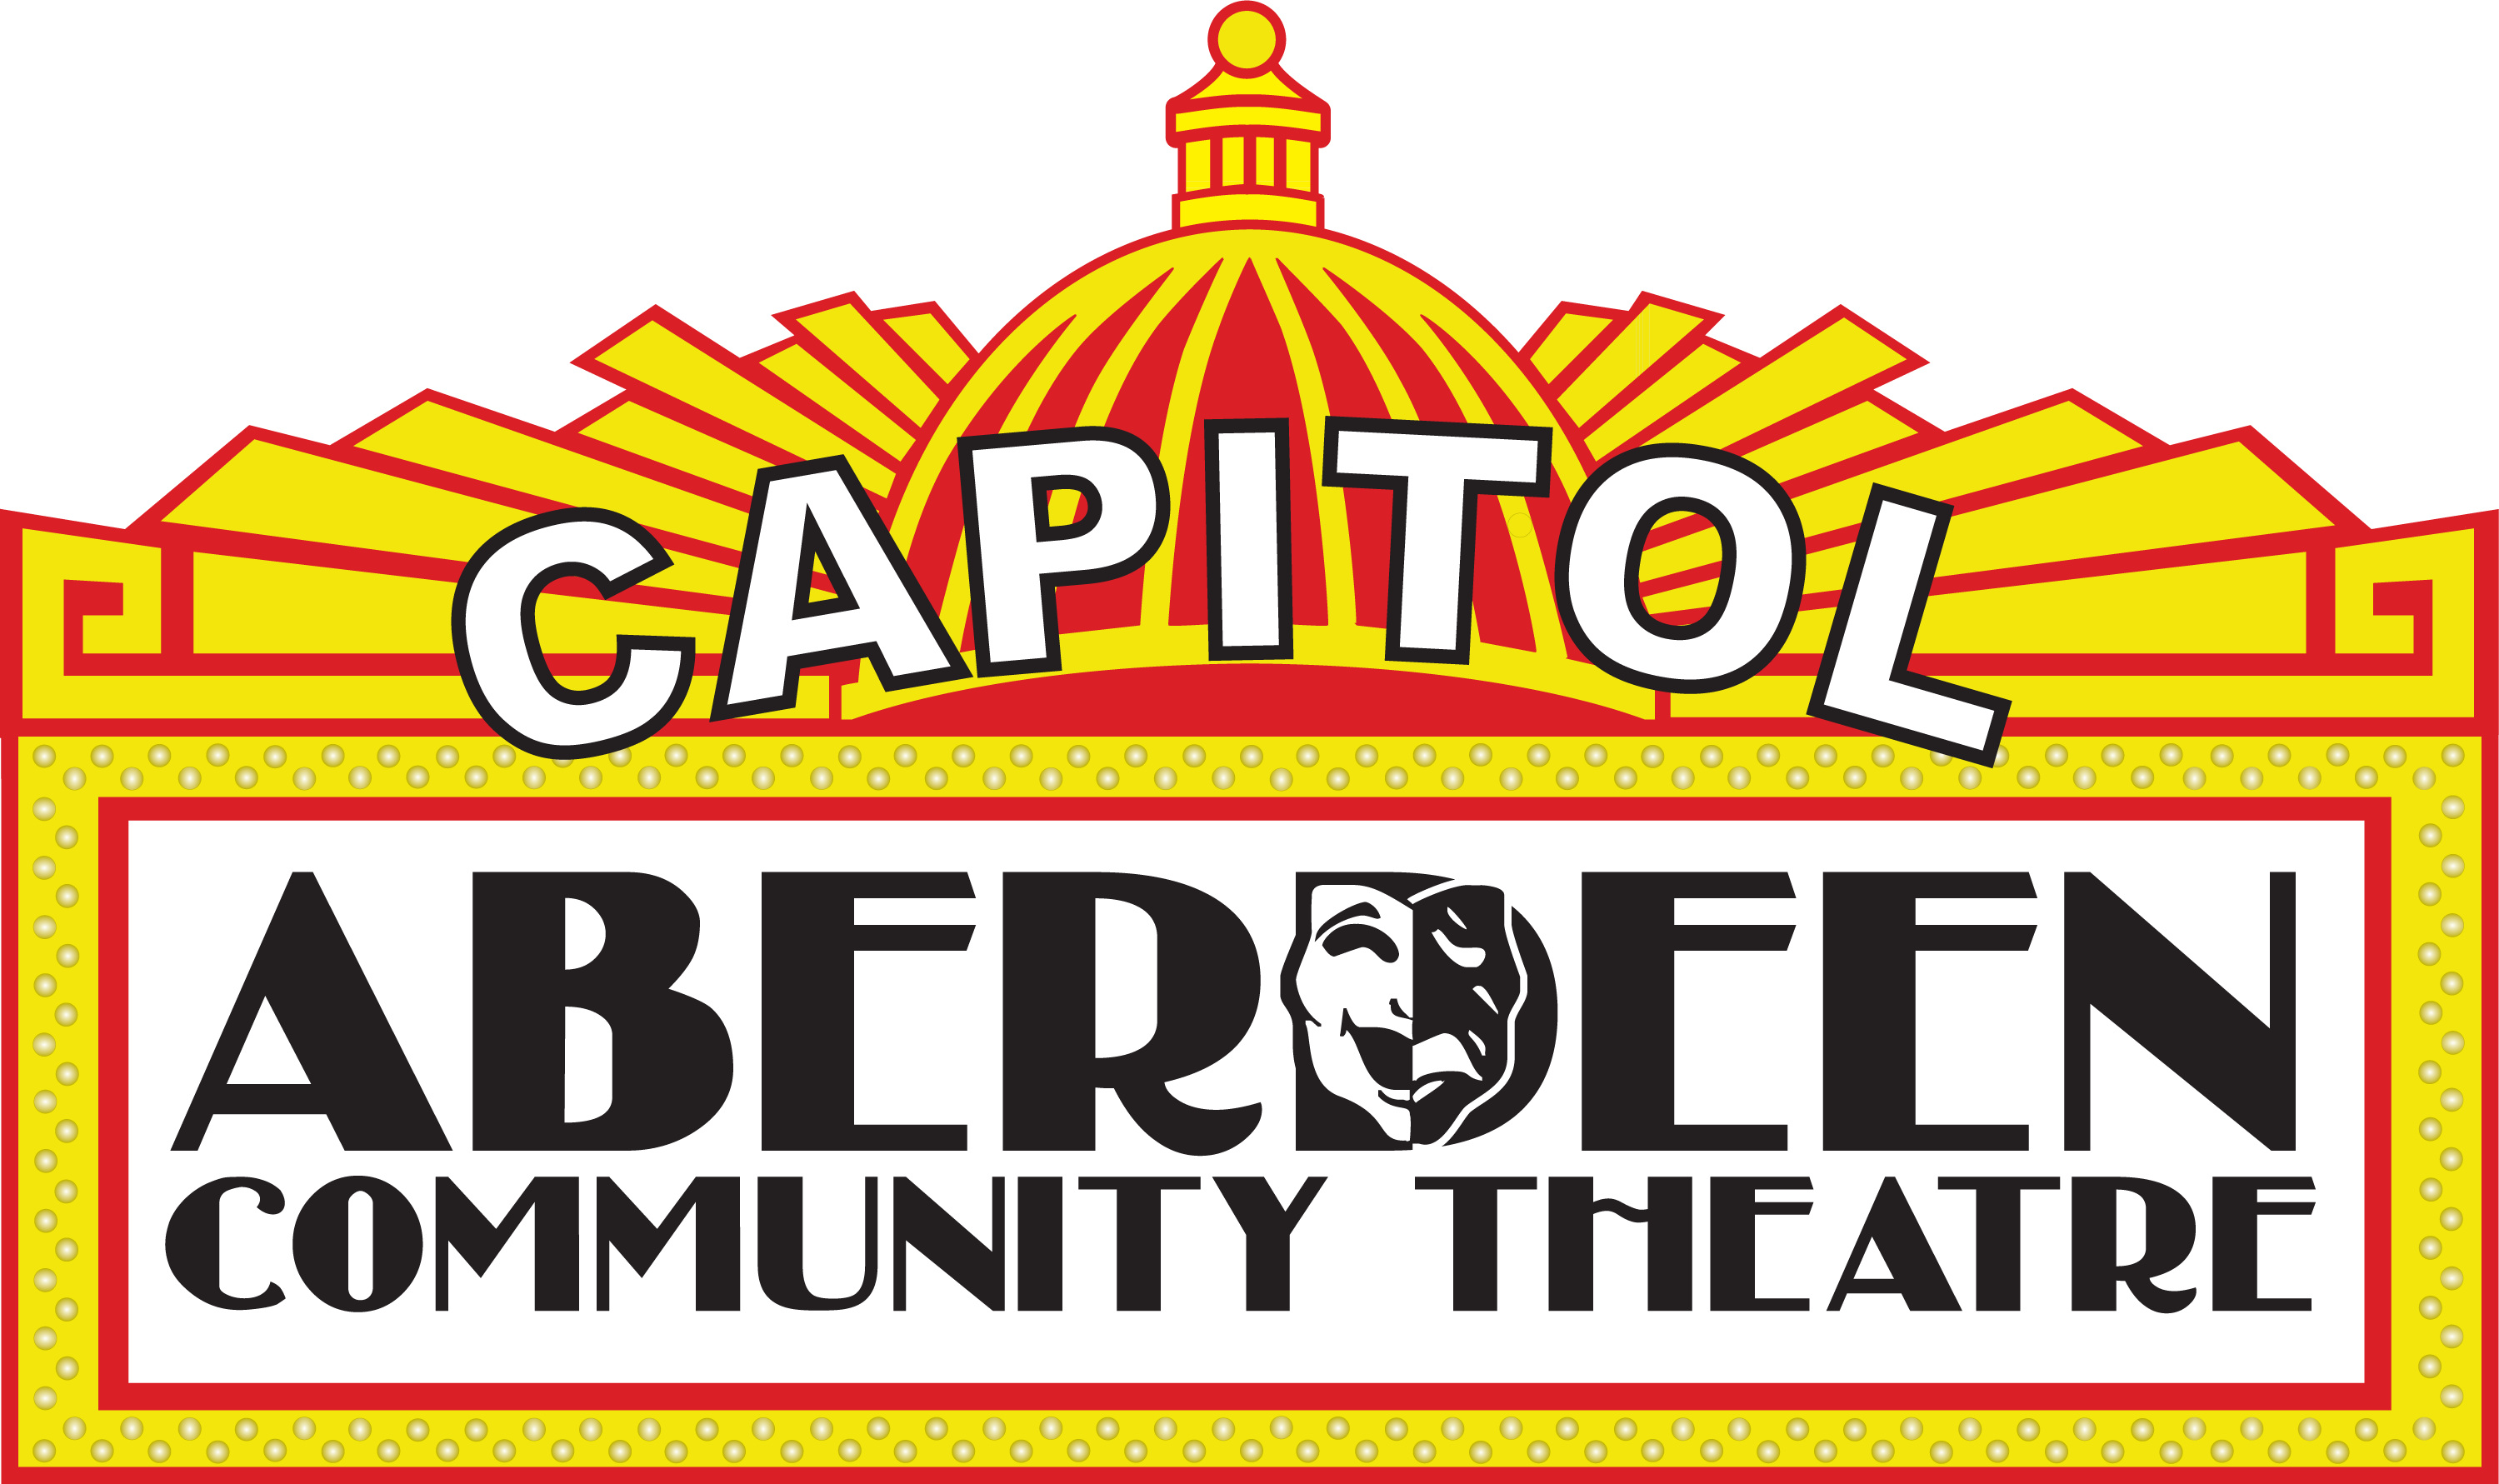 ACT 2 Inc., dba Aberdeen Community Theatre logo